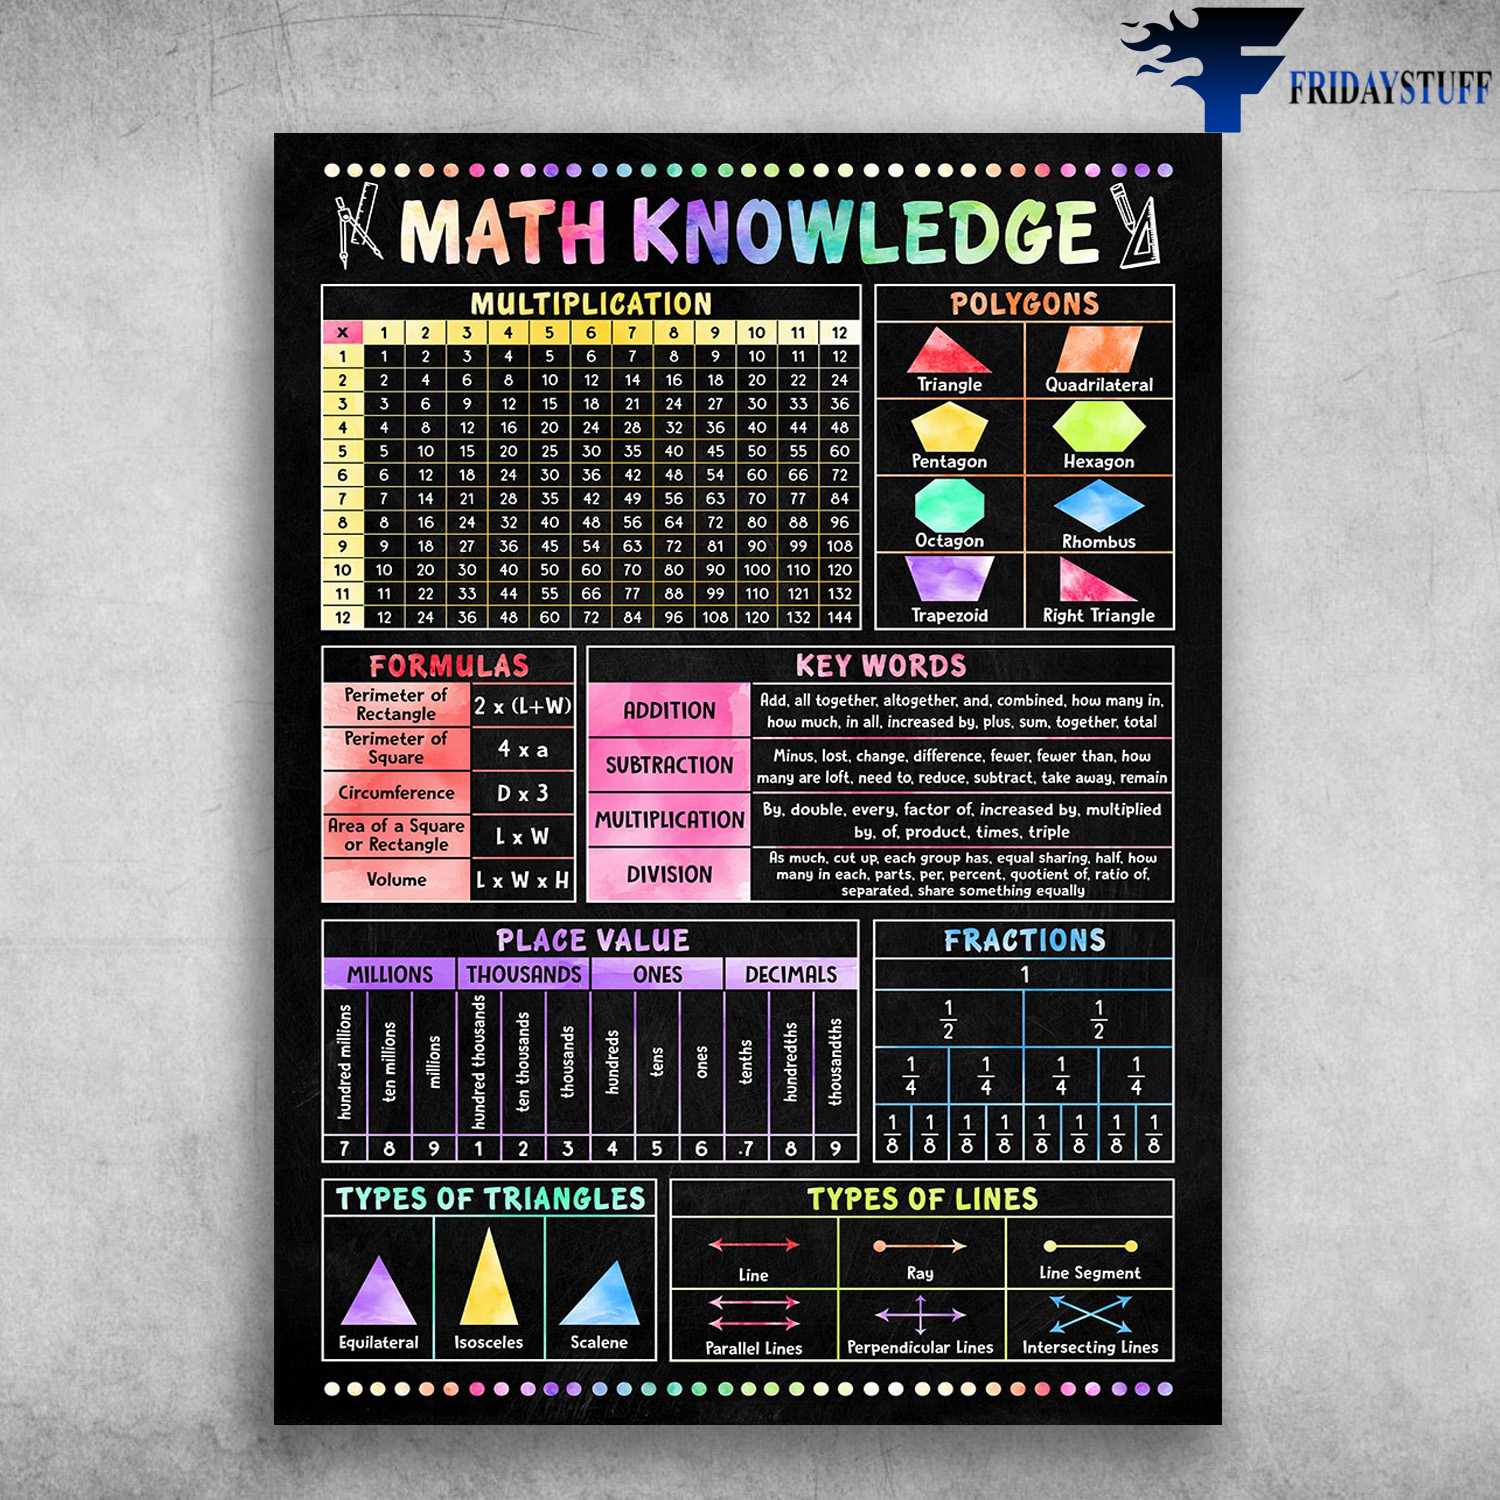 Math Knowledge - Multiplication, Polygons, Pormulas, Key Words, Place Value, Fraction